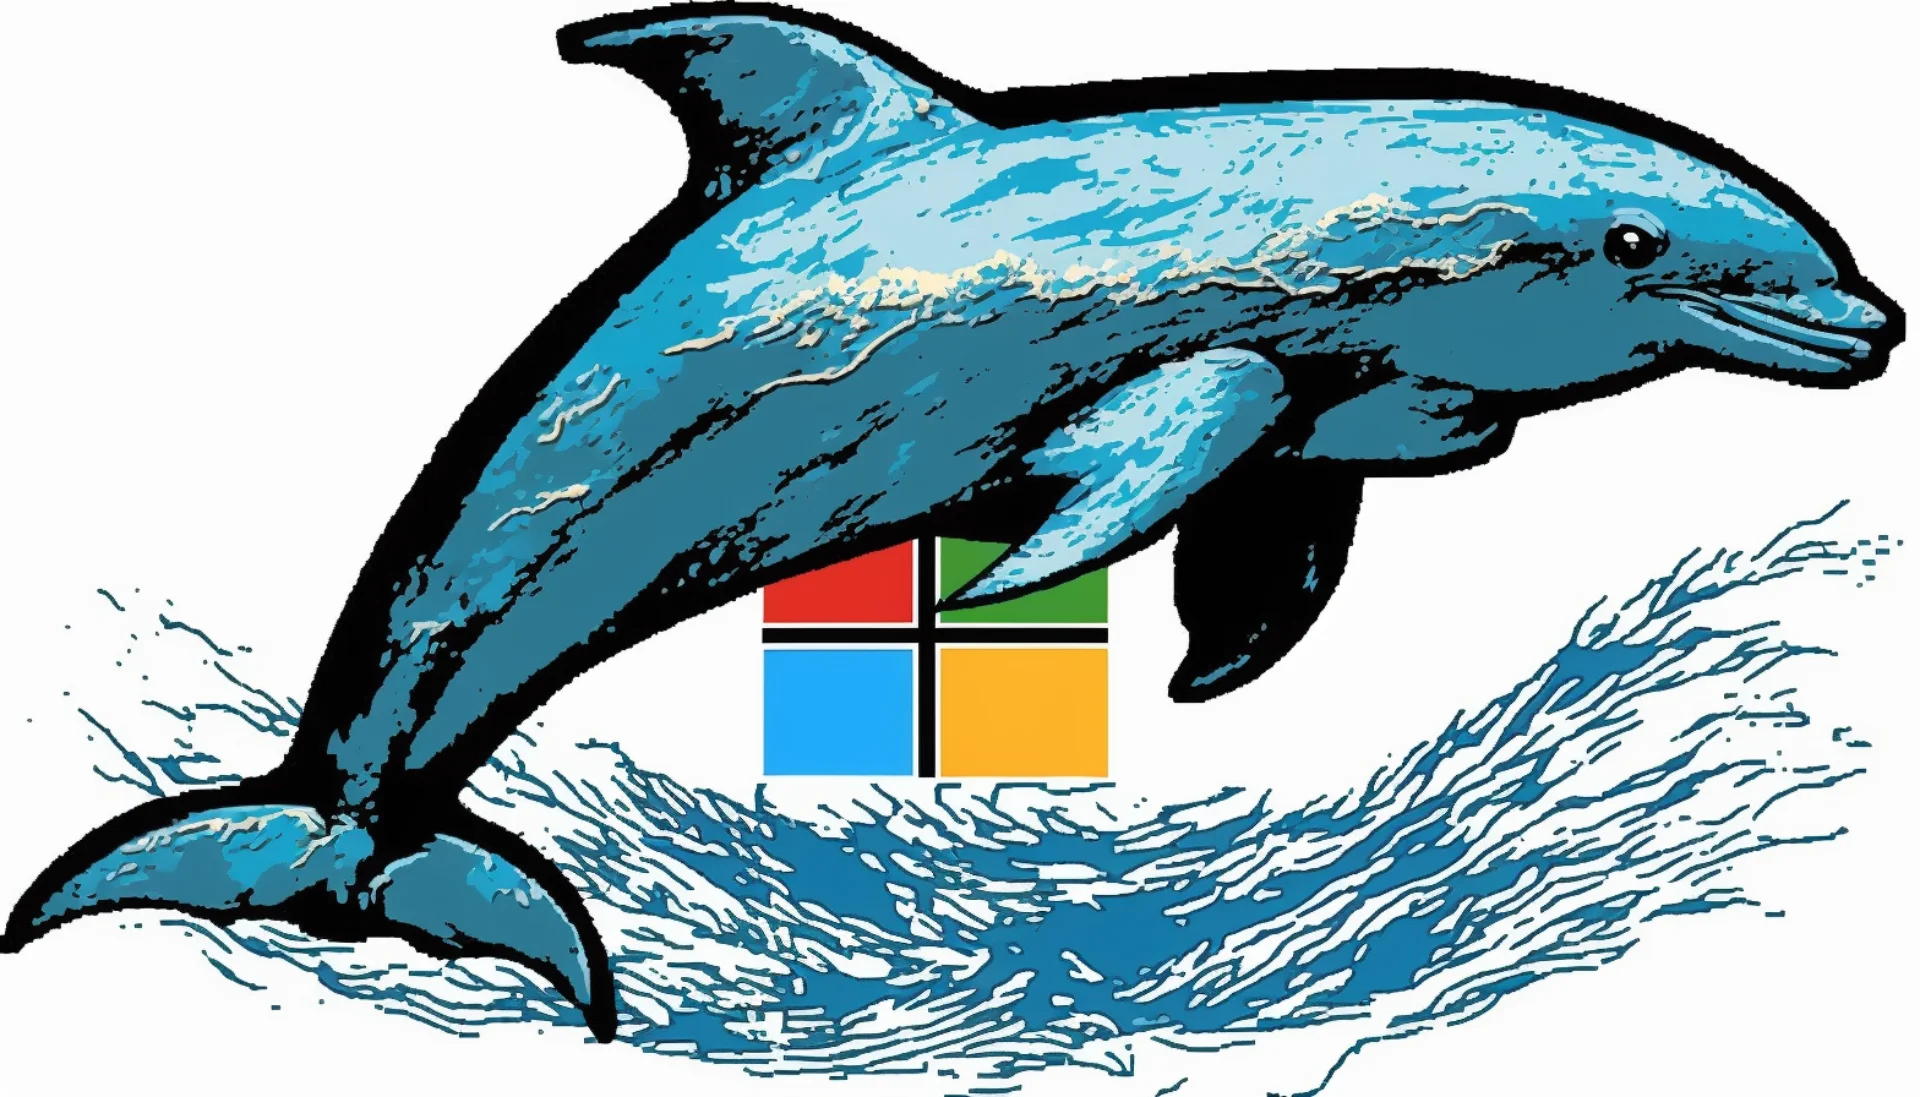 Manu23 dolphin with Microsoft Windows Logo colors sega game 8a84bf84 c3f7 4e32 a9c3 1ebbb6341063